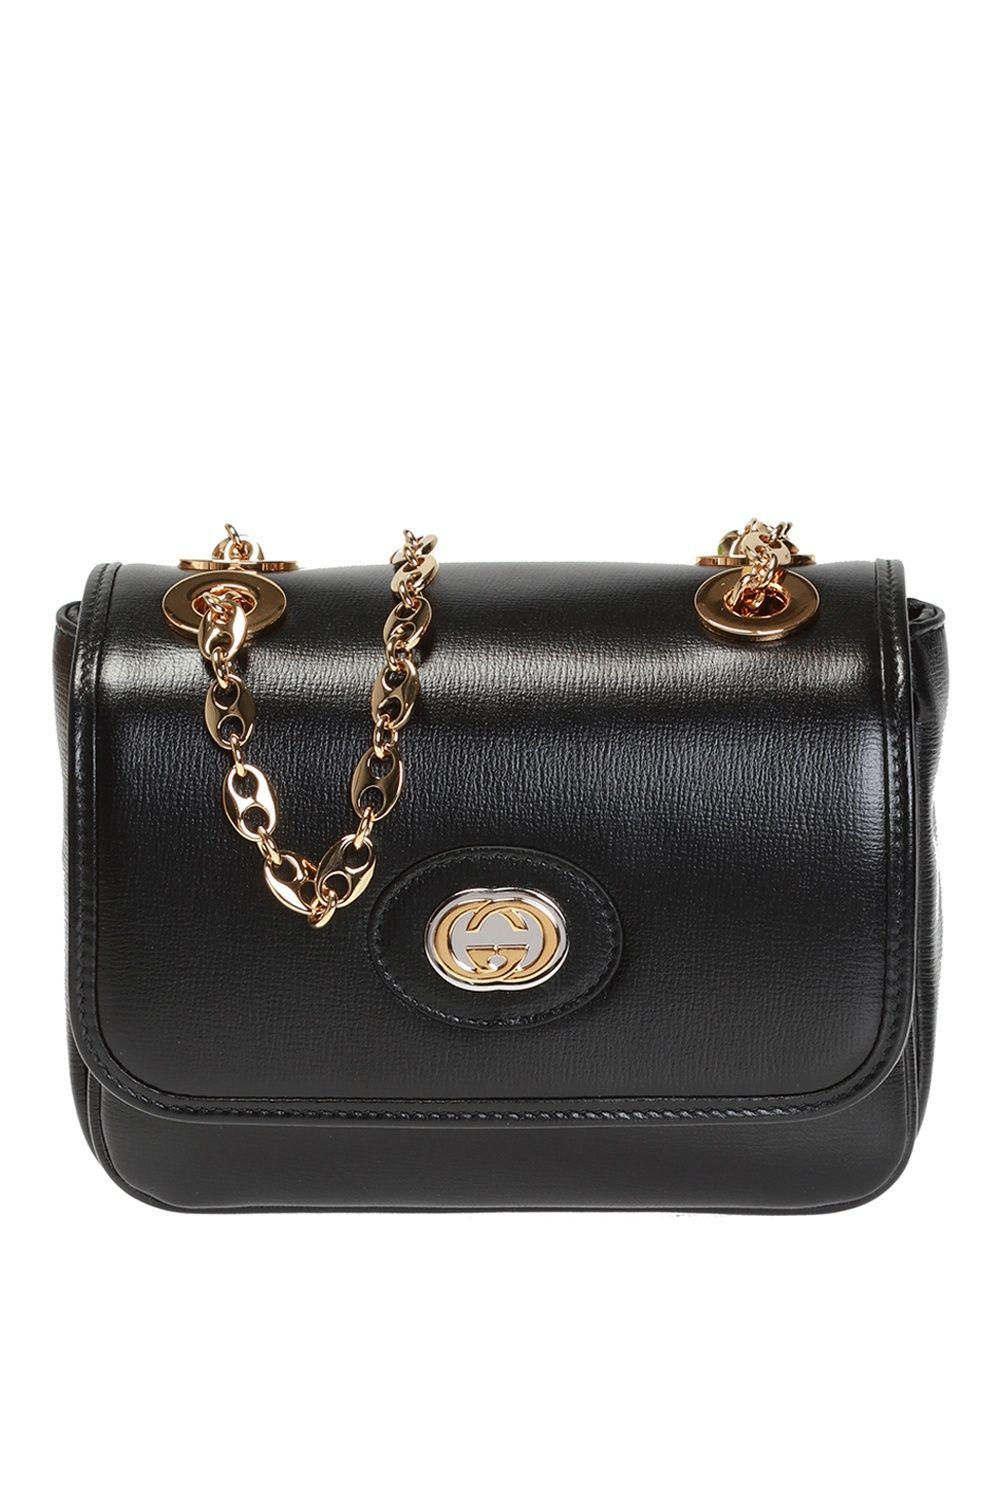 Gucci 'marina' Shoulder Bag in Black | Lyst